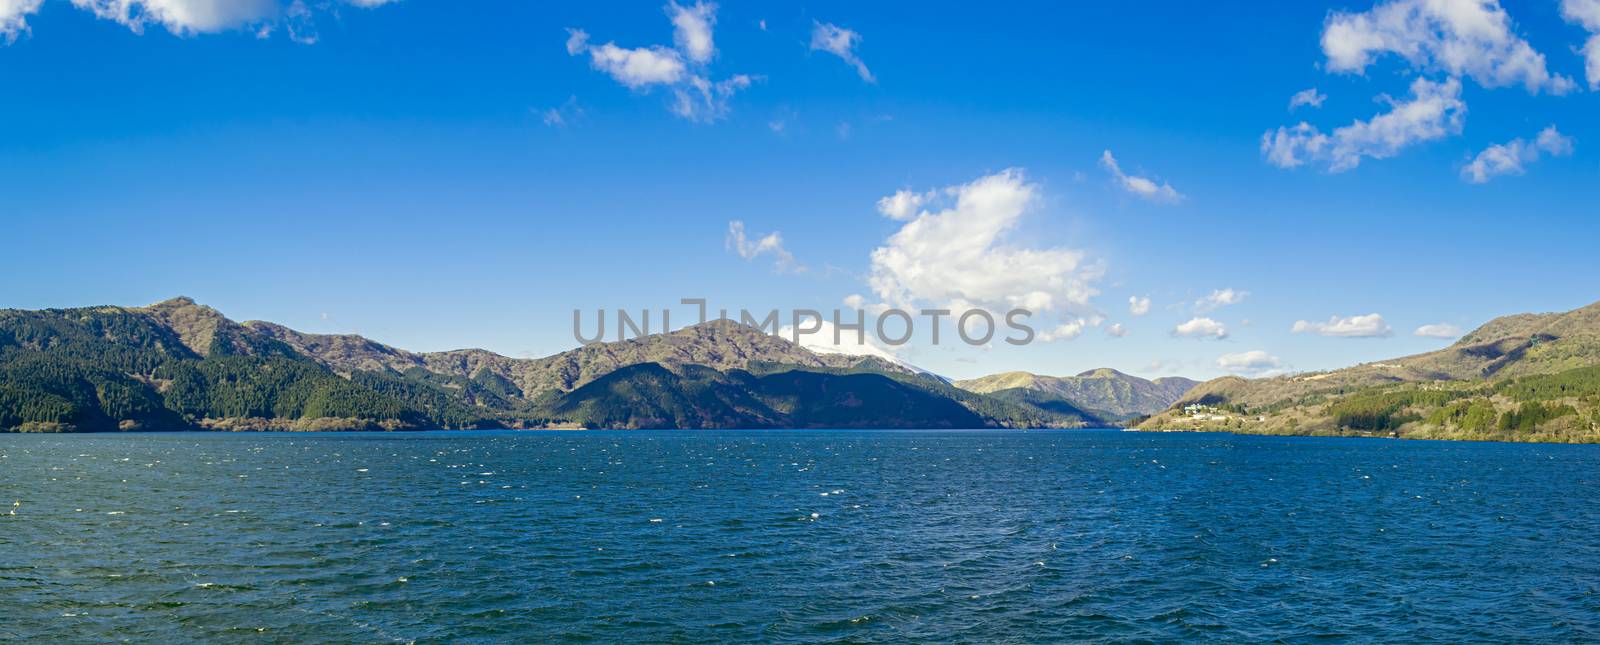 Panorama picture of beautiful lake and mountains  by wattanaphob